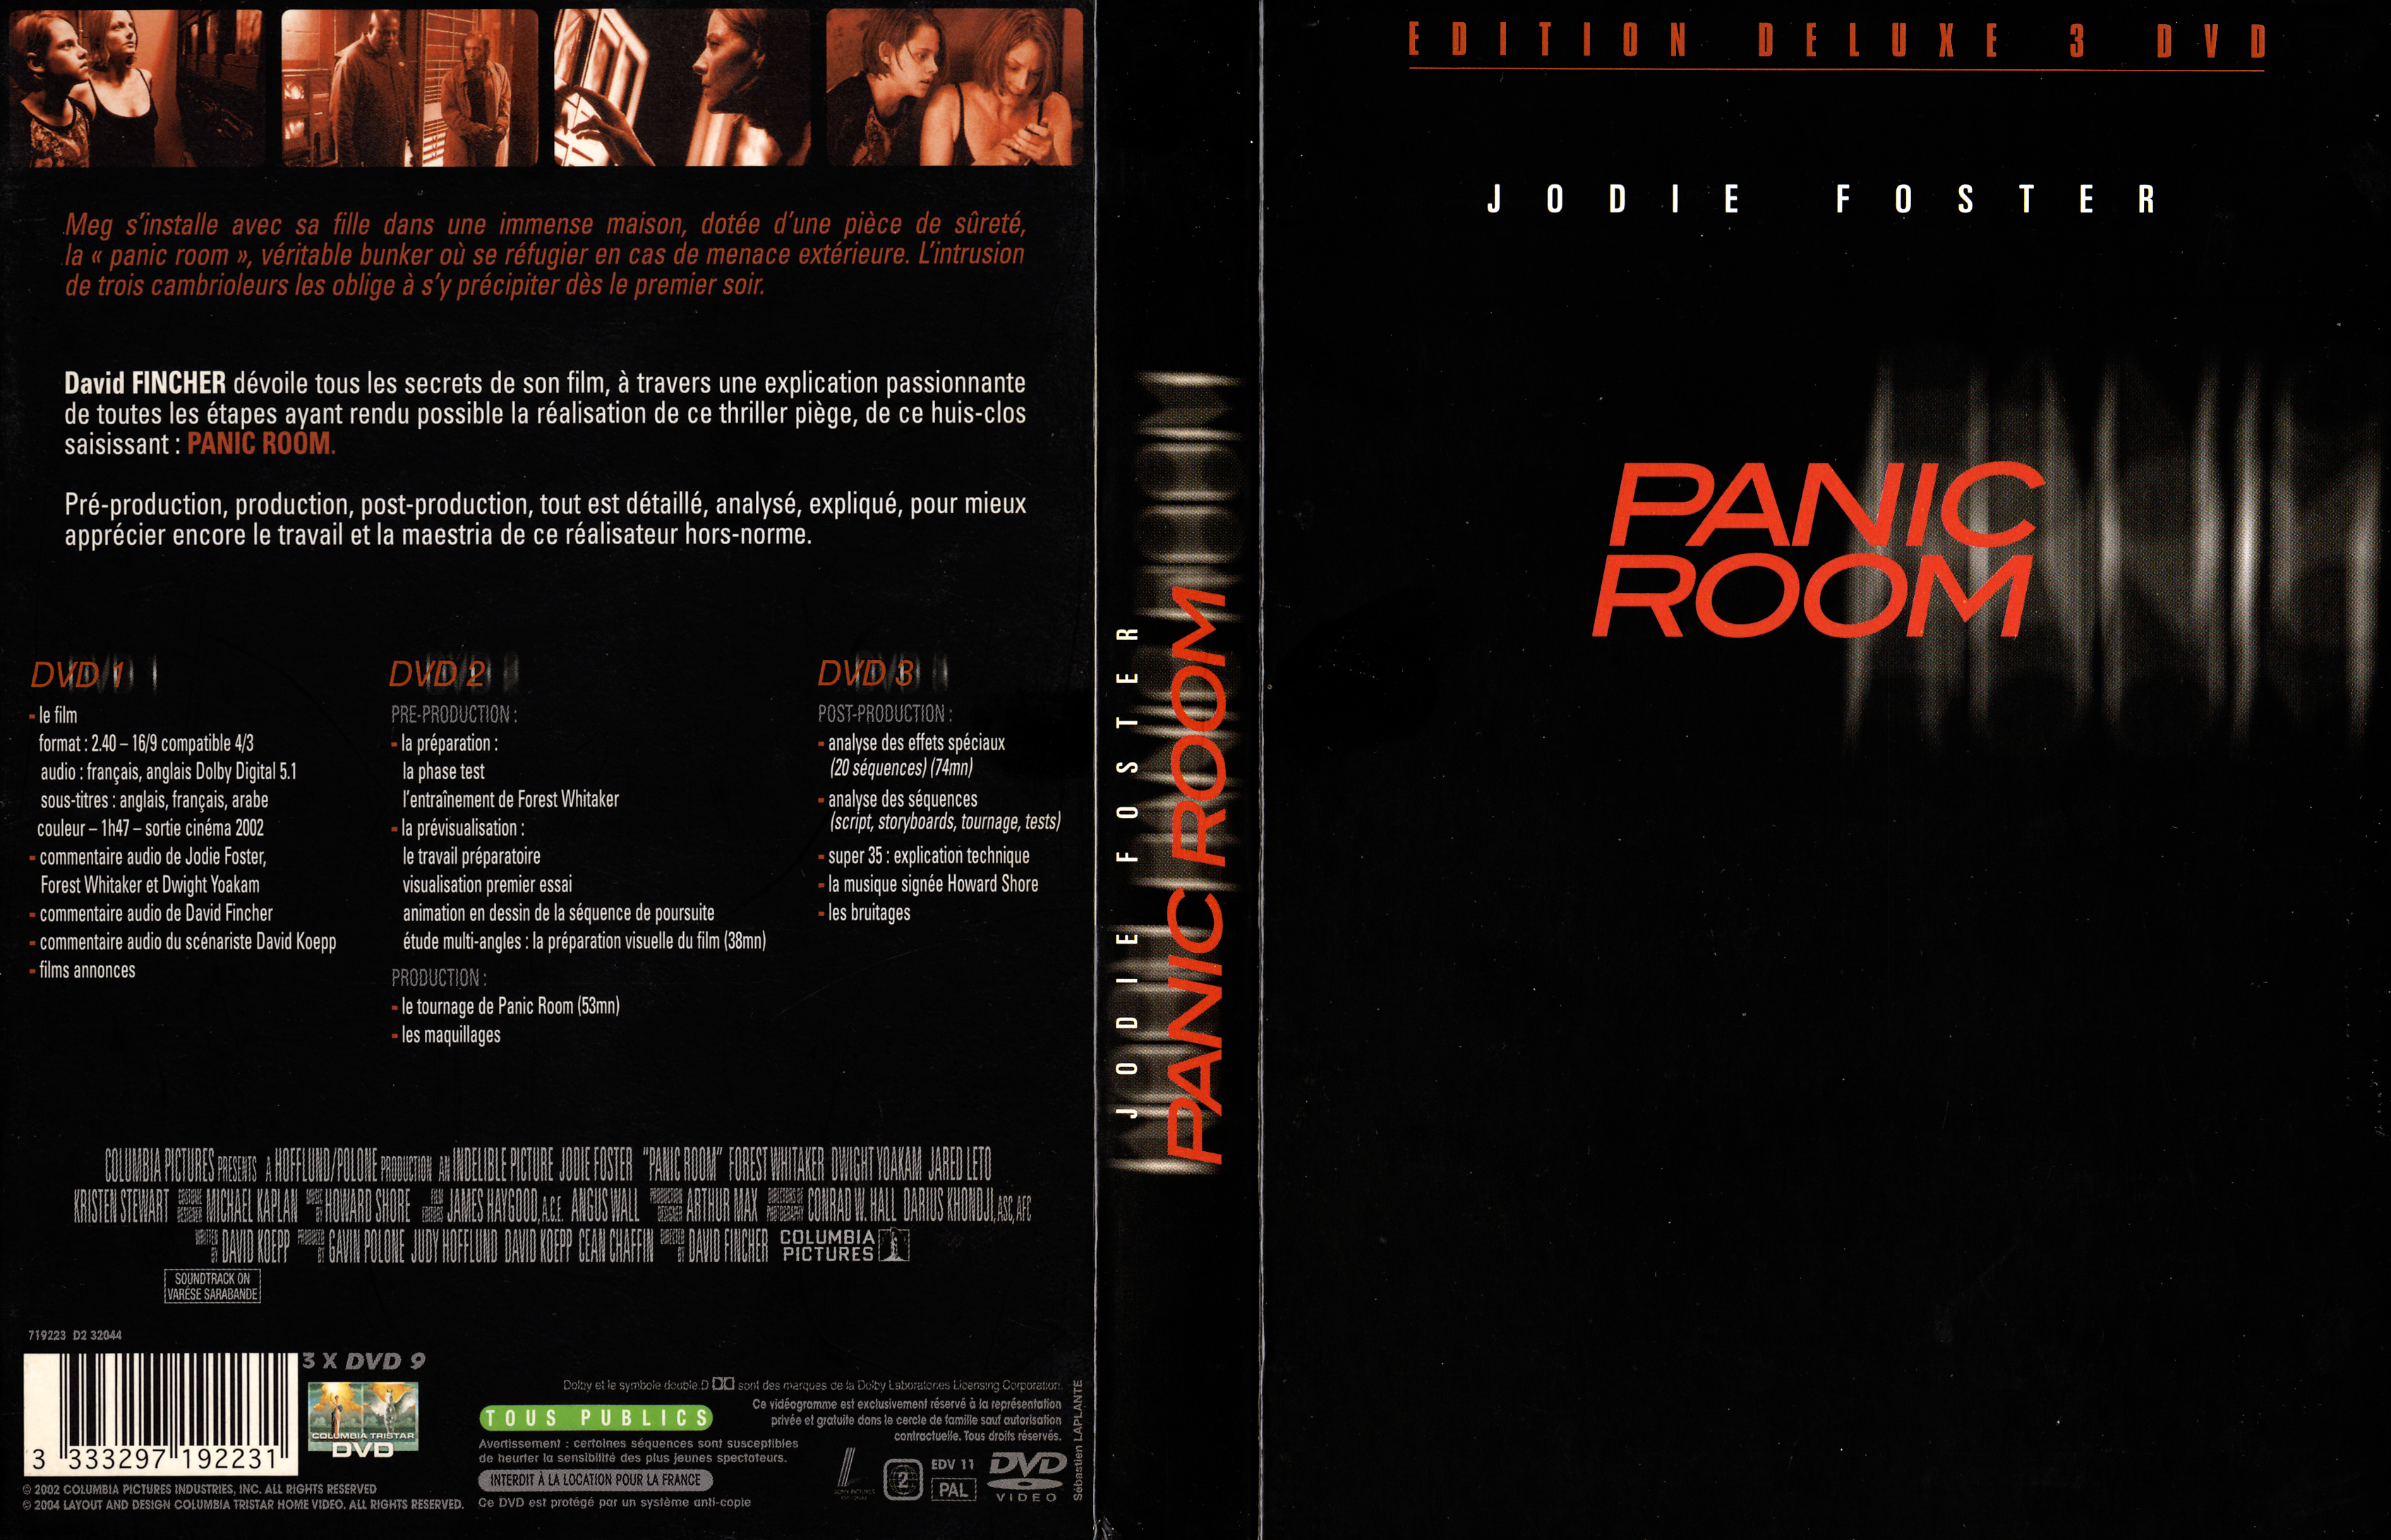 Jaquette DVD Panic Room v2